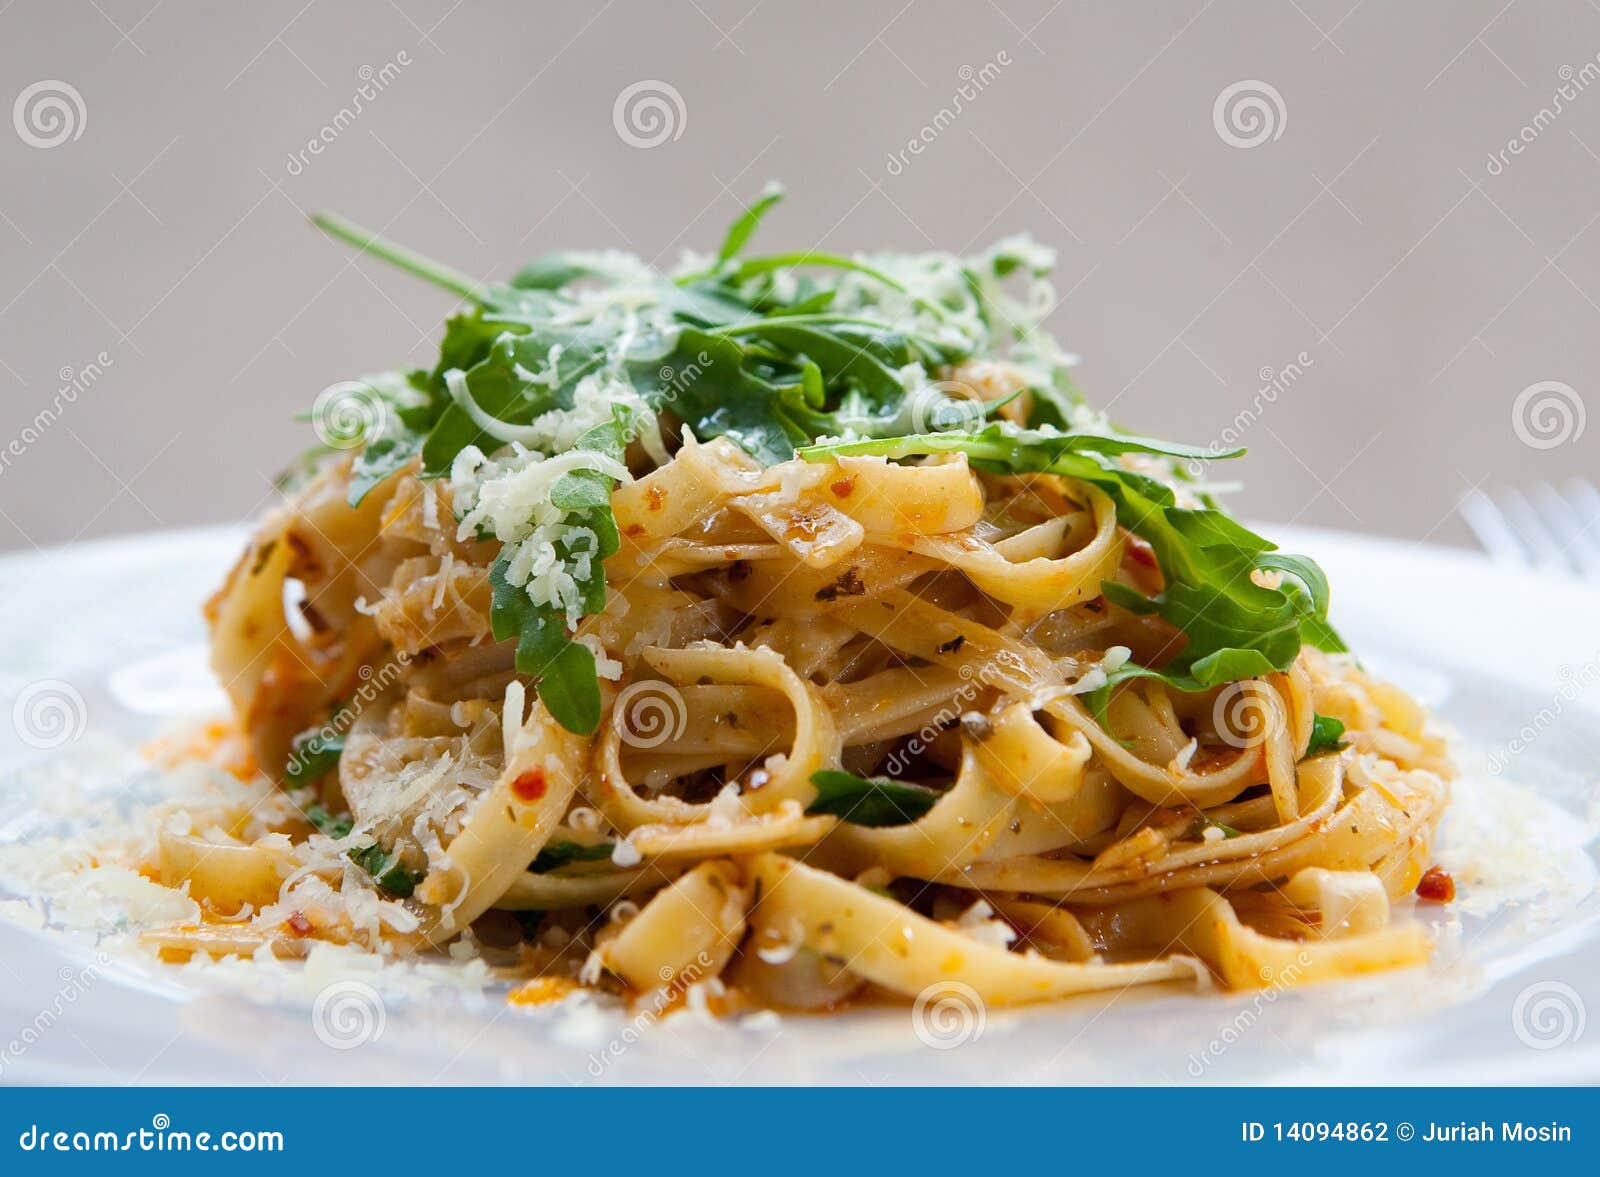 fettucine pasta with sundried tomato